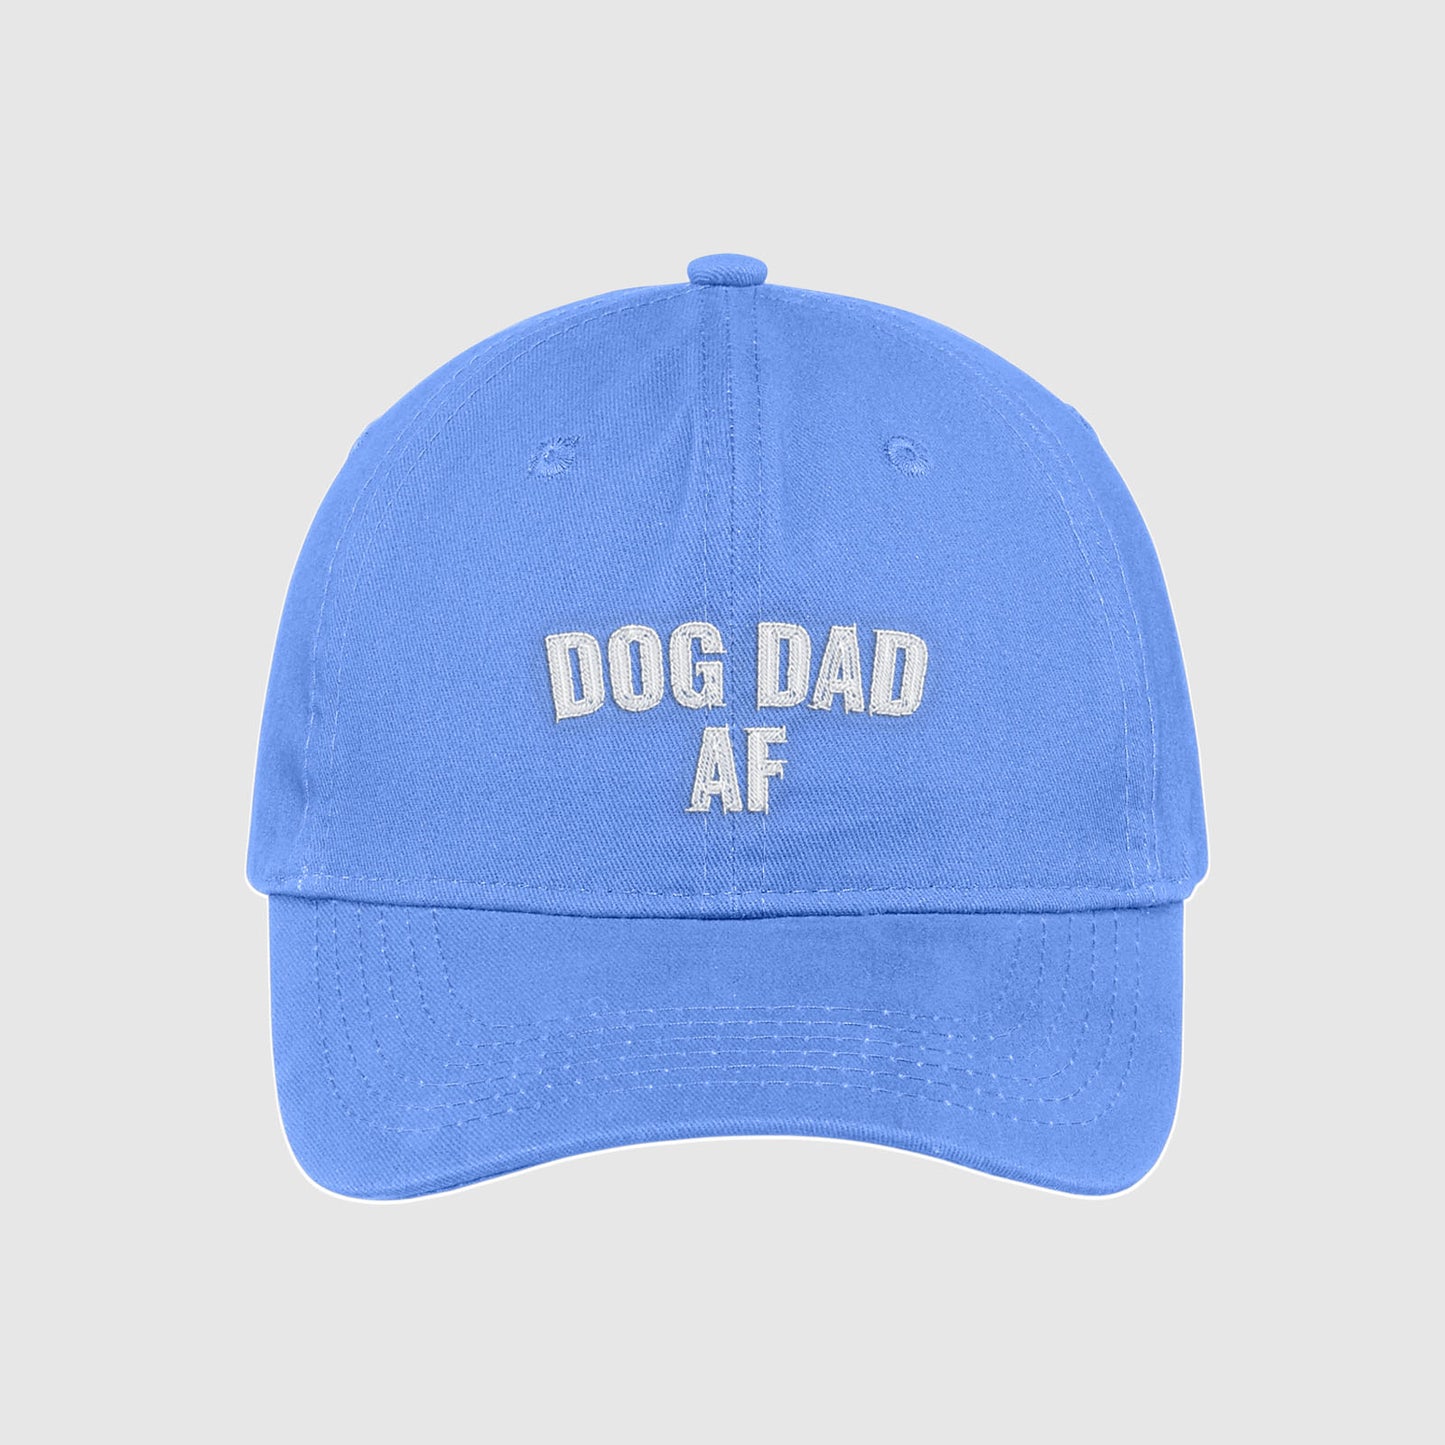 Carolina Blue Dog Dad AF Hat embroidered with white text